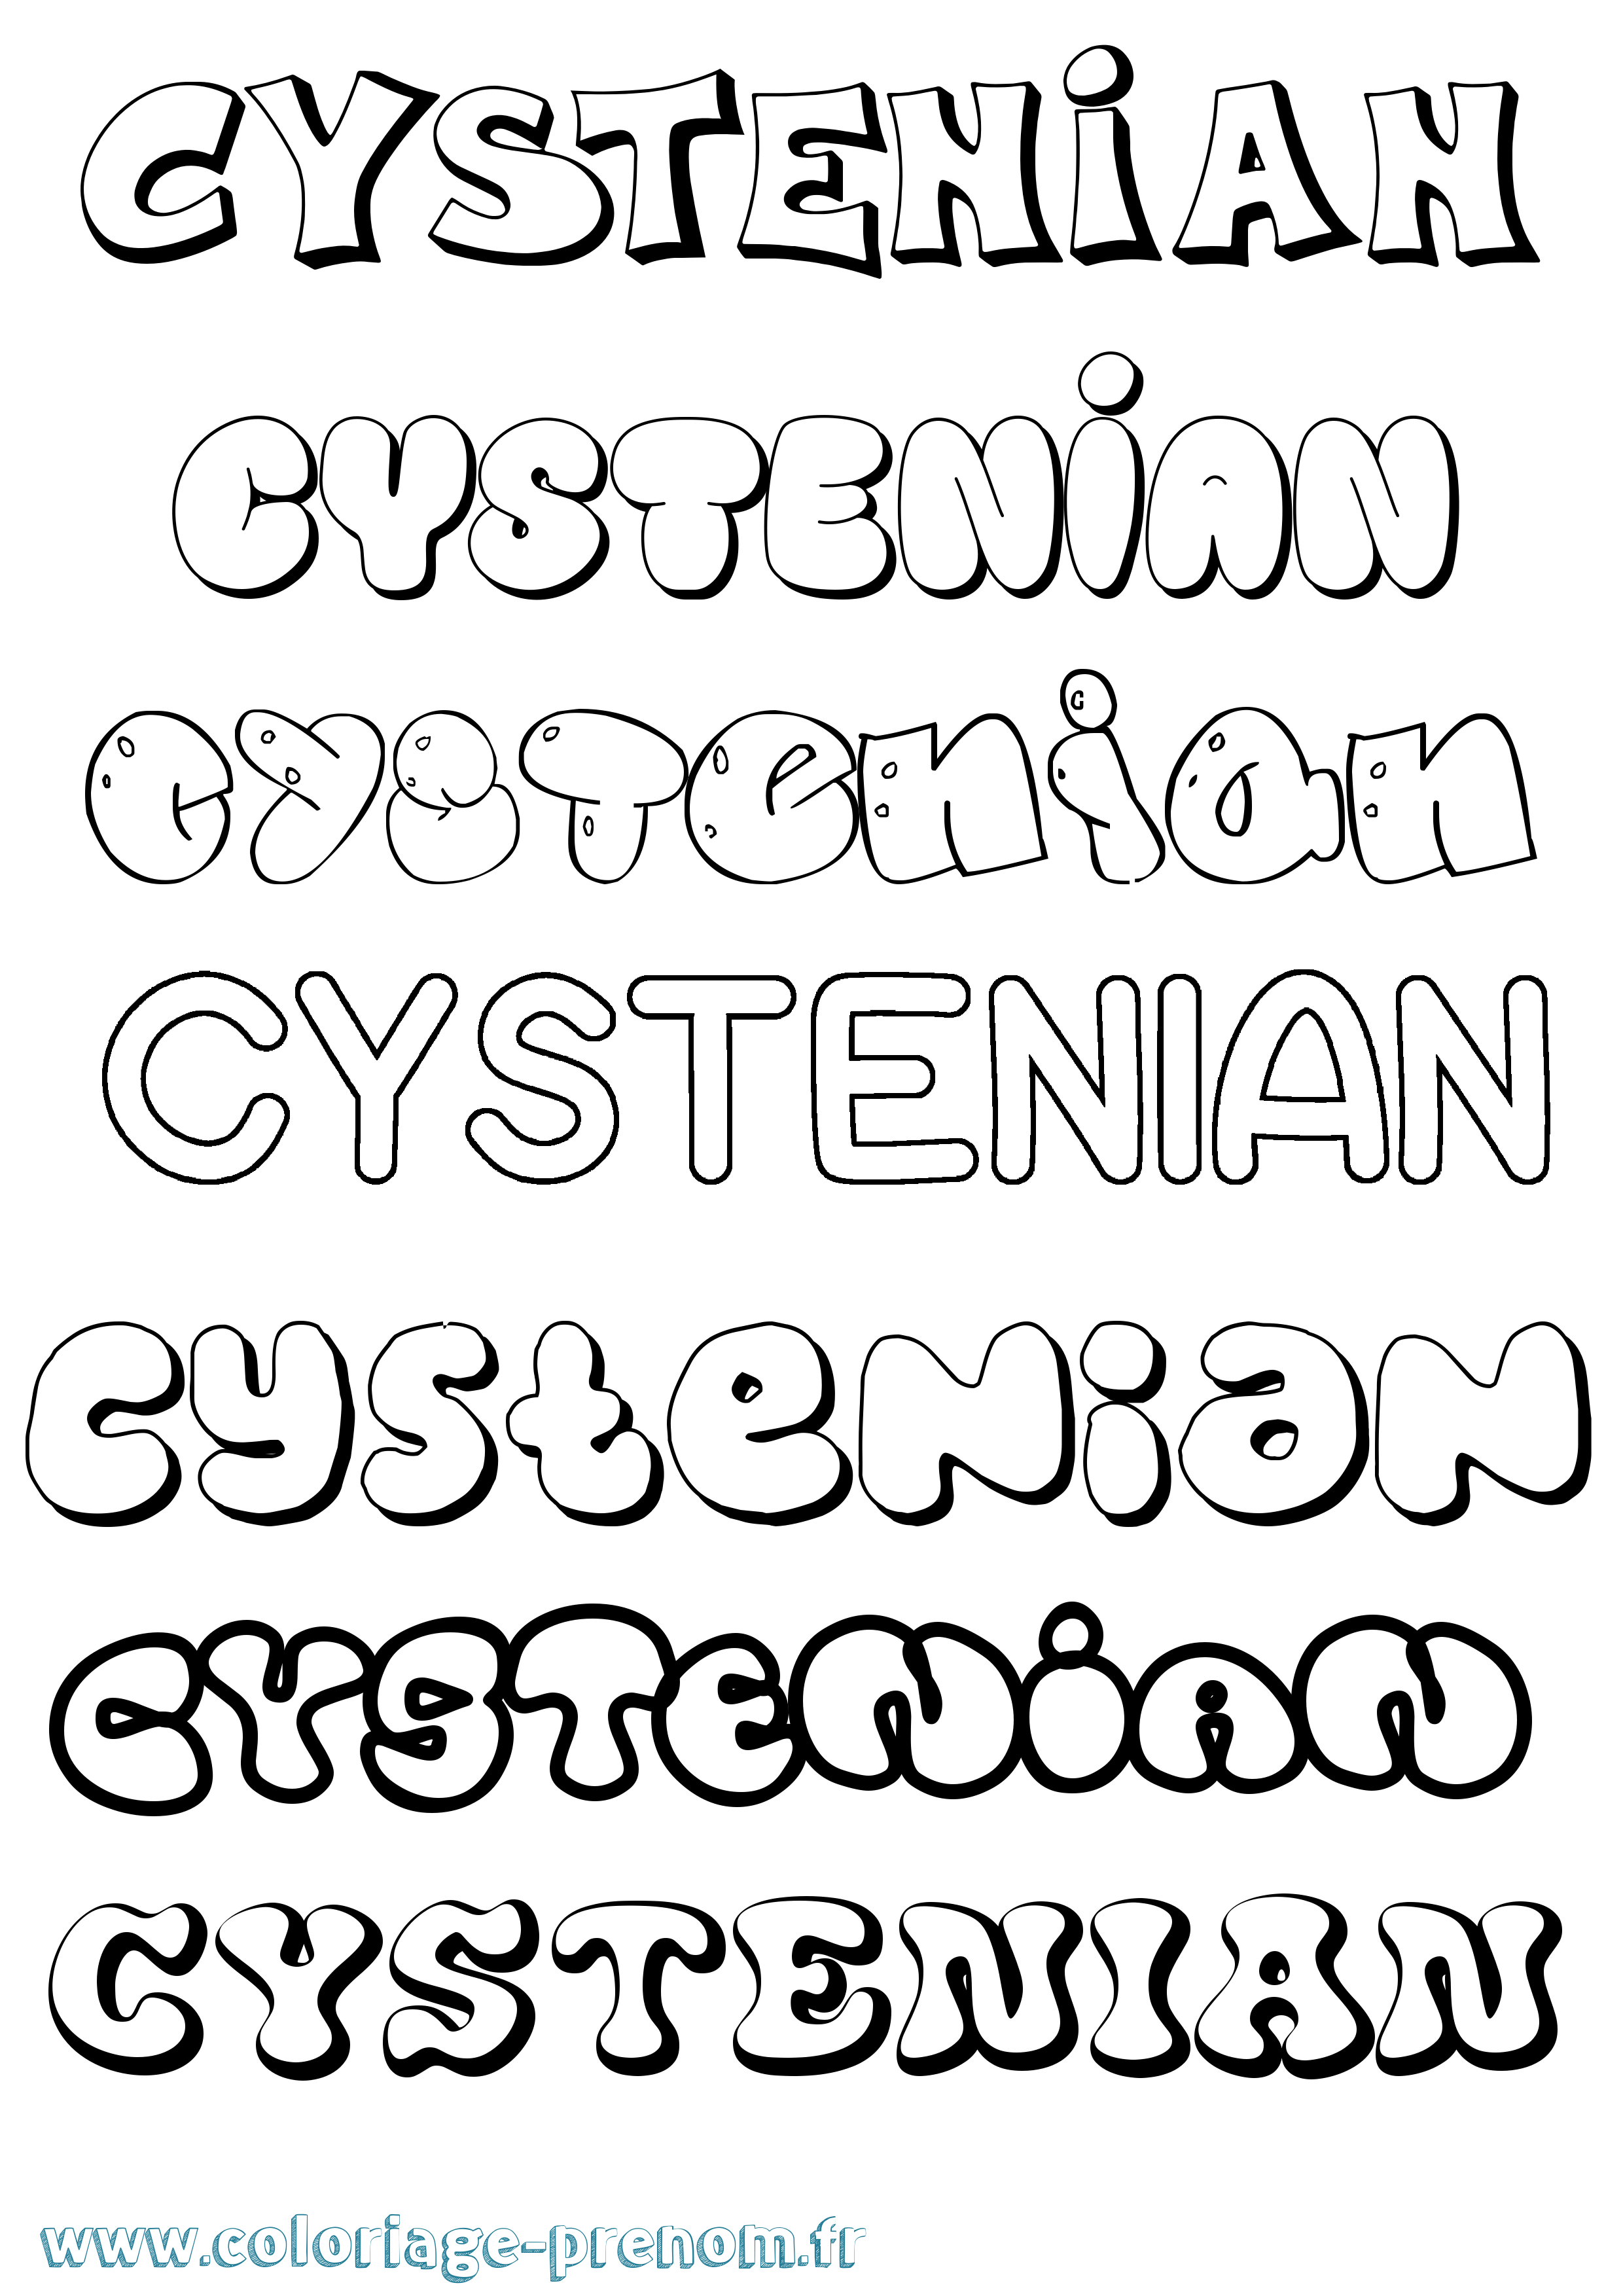 Coloriage prénom Cystenian Bubble